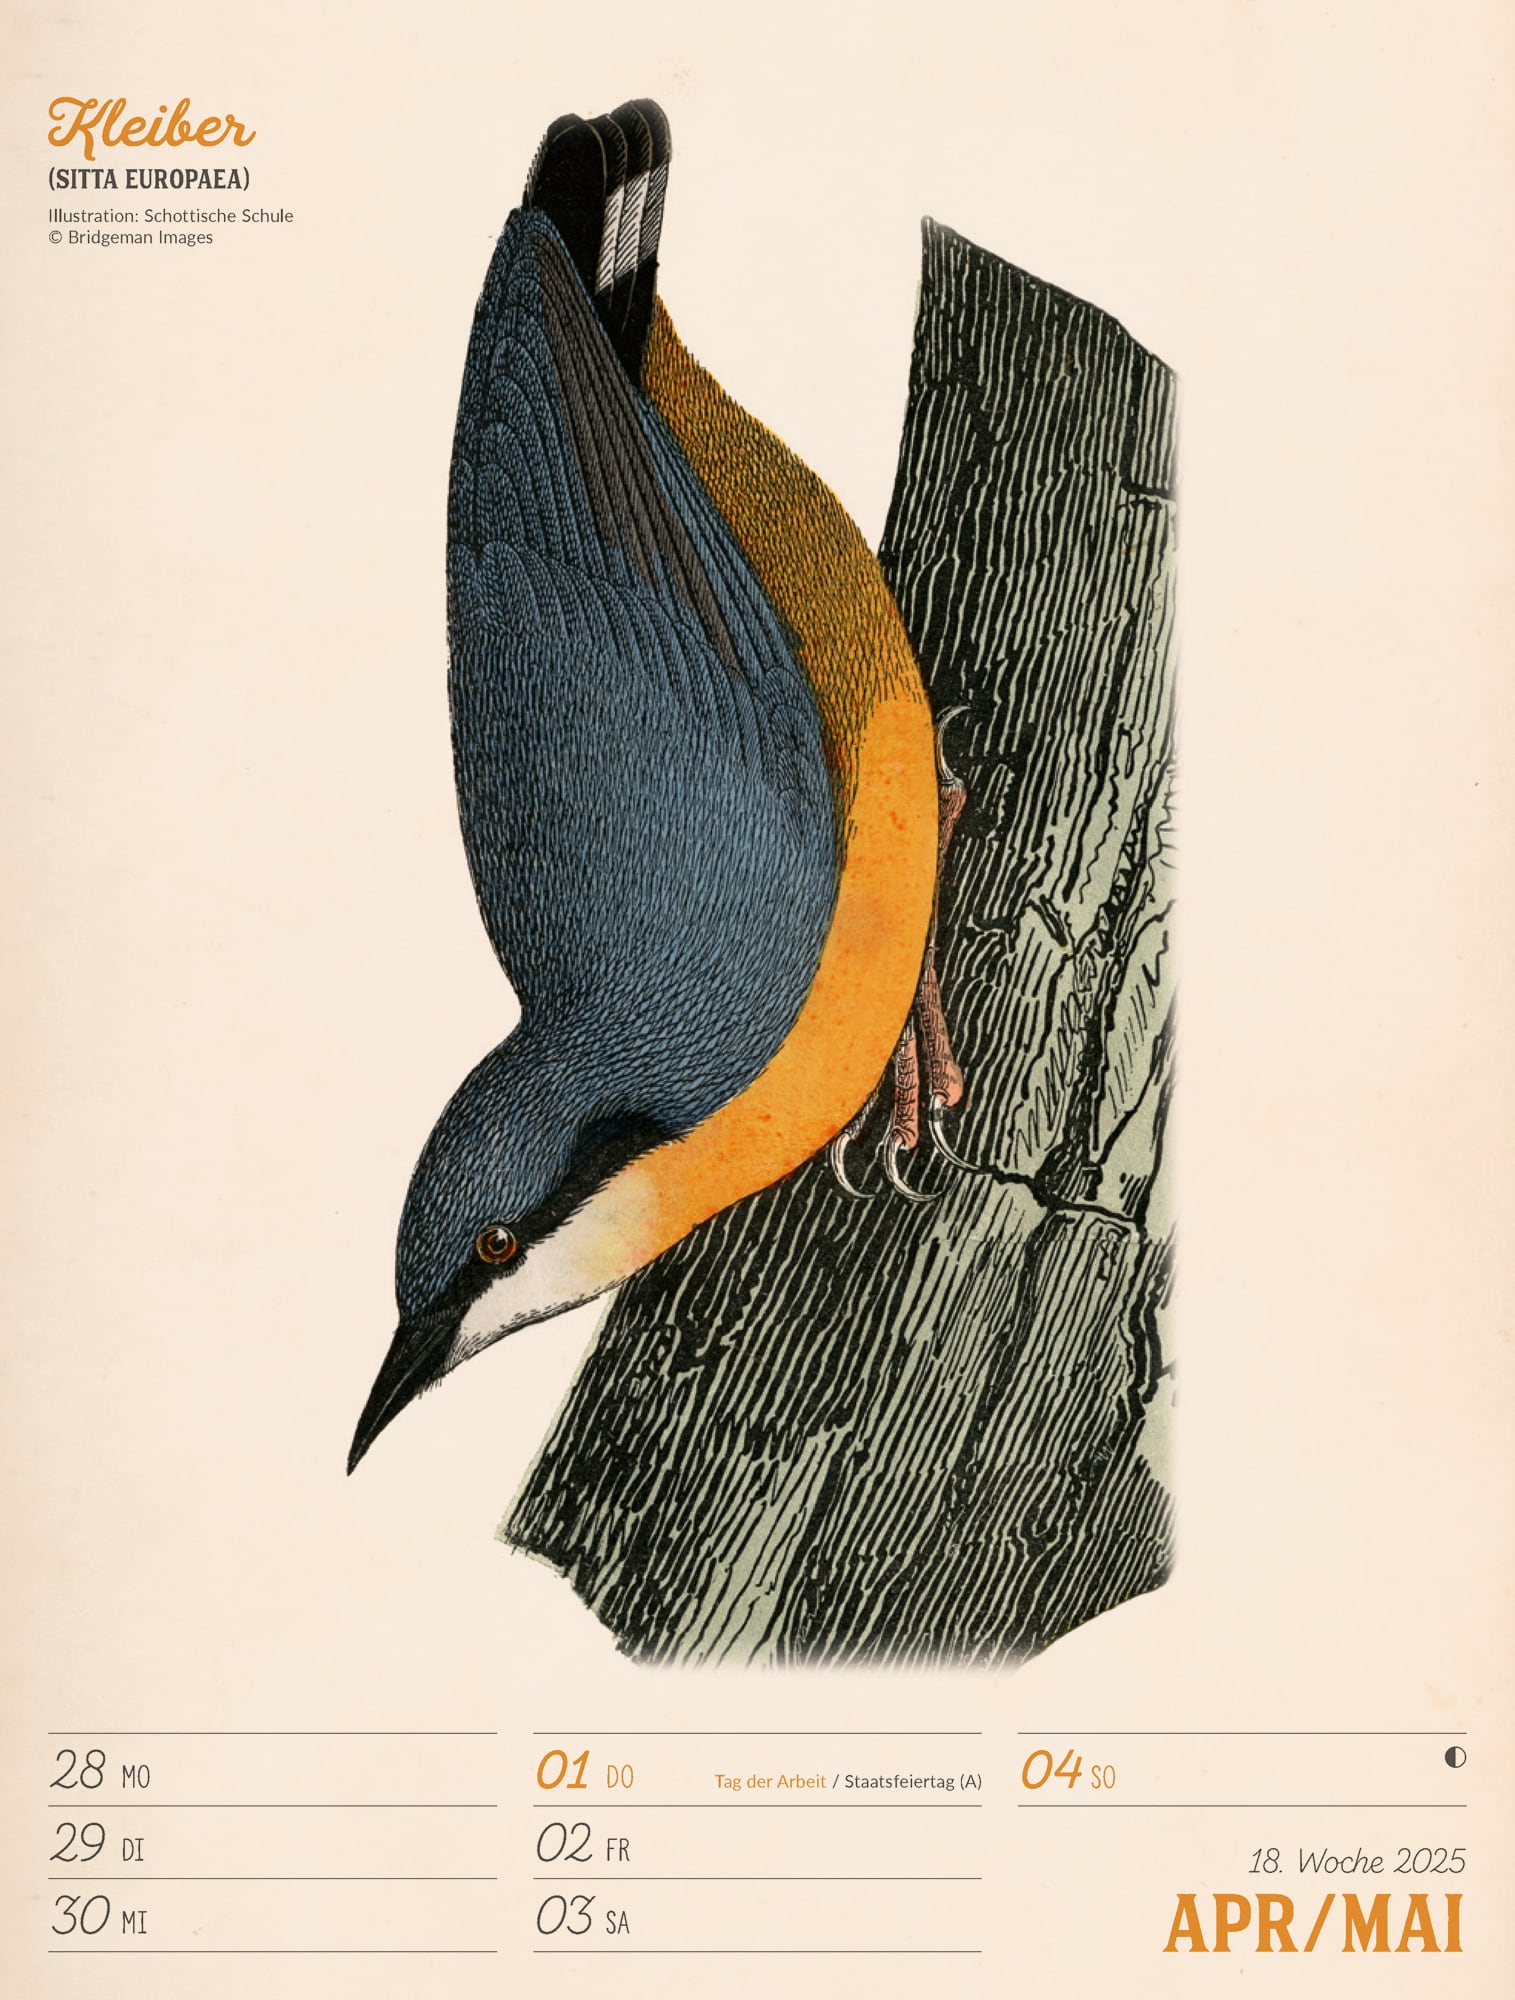 Ackermann Calendar The wonderful World of Birds 2025 - Weekly Planner - Inside View 21